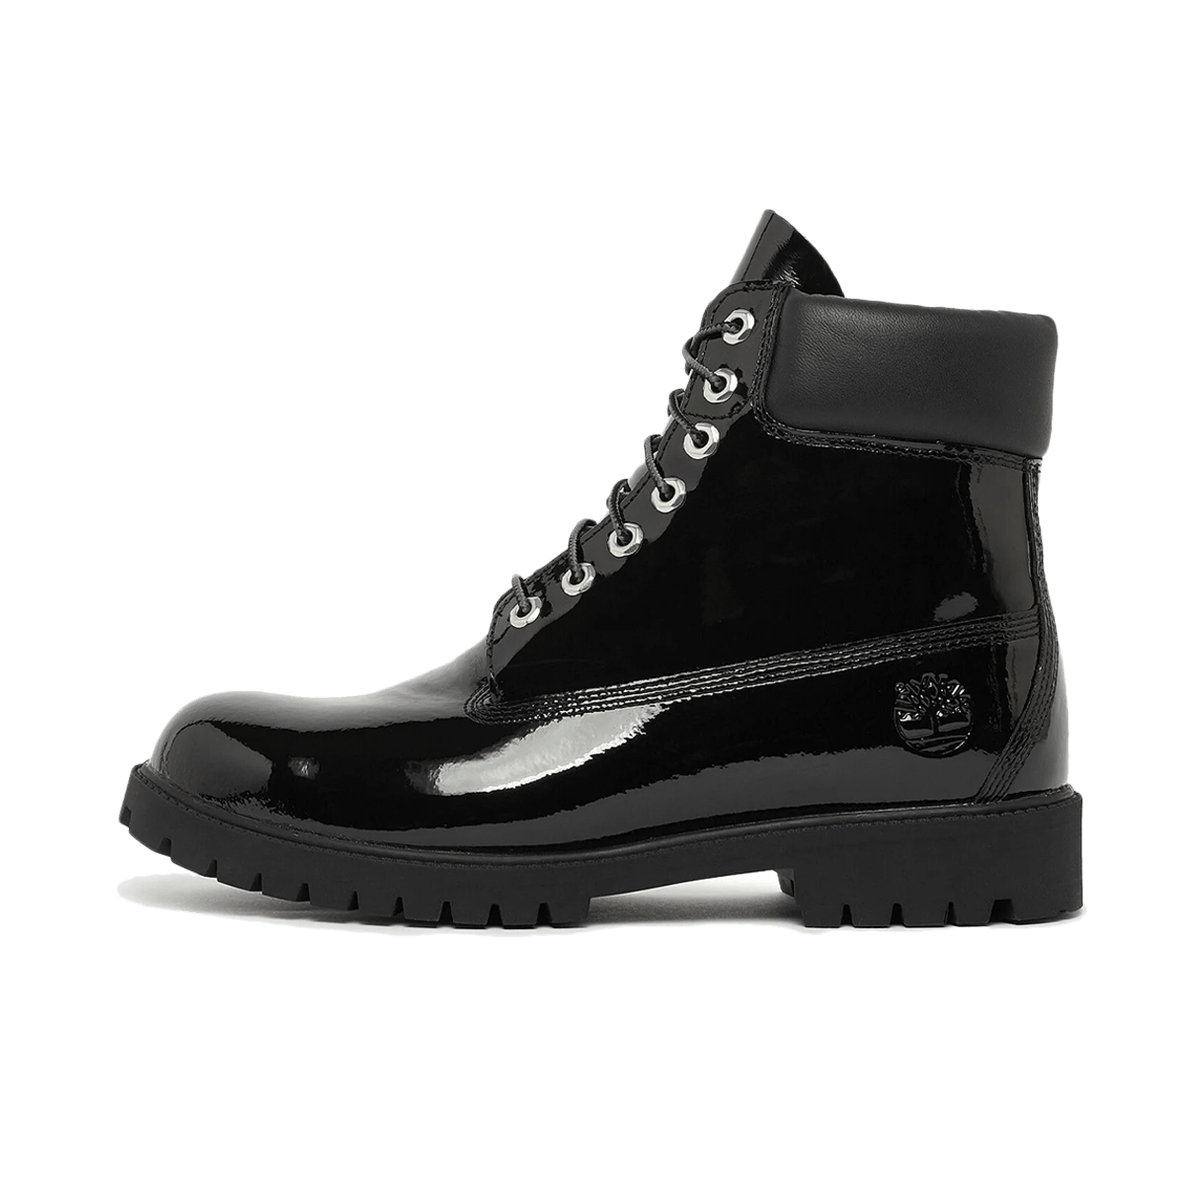 Veneda Carter x Timberland 6 Inch Boot 'Black'